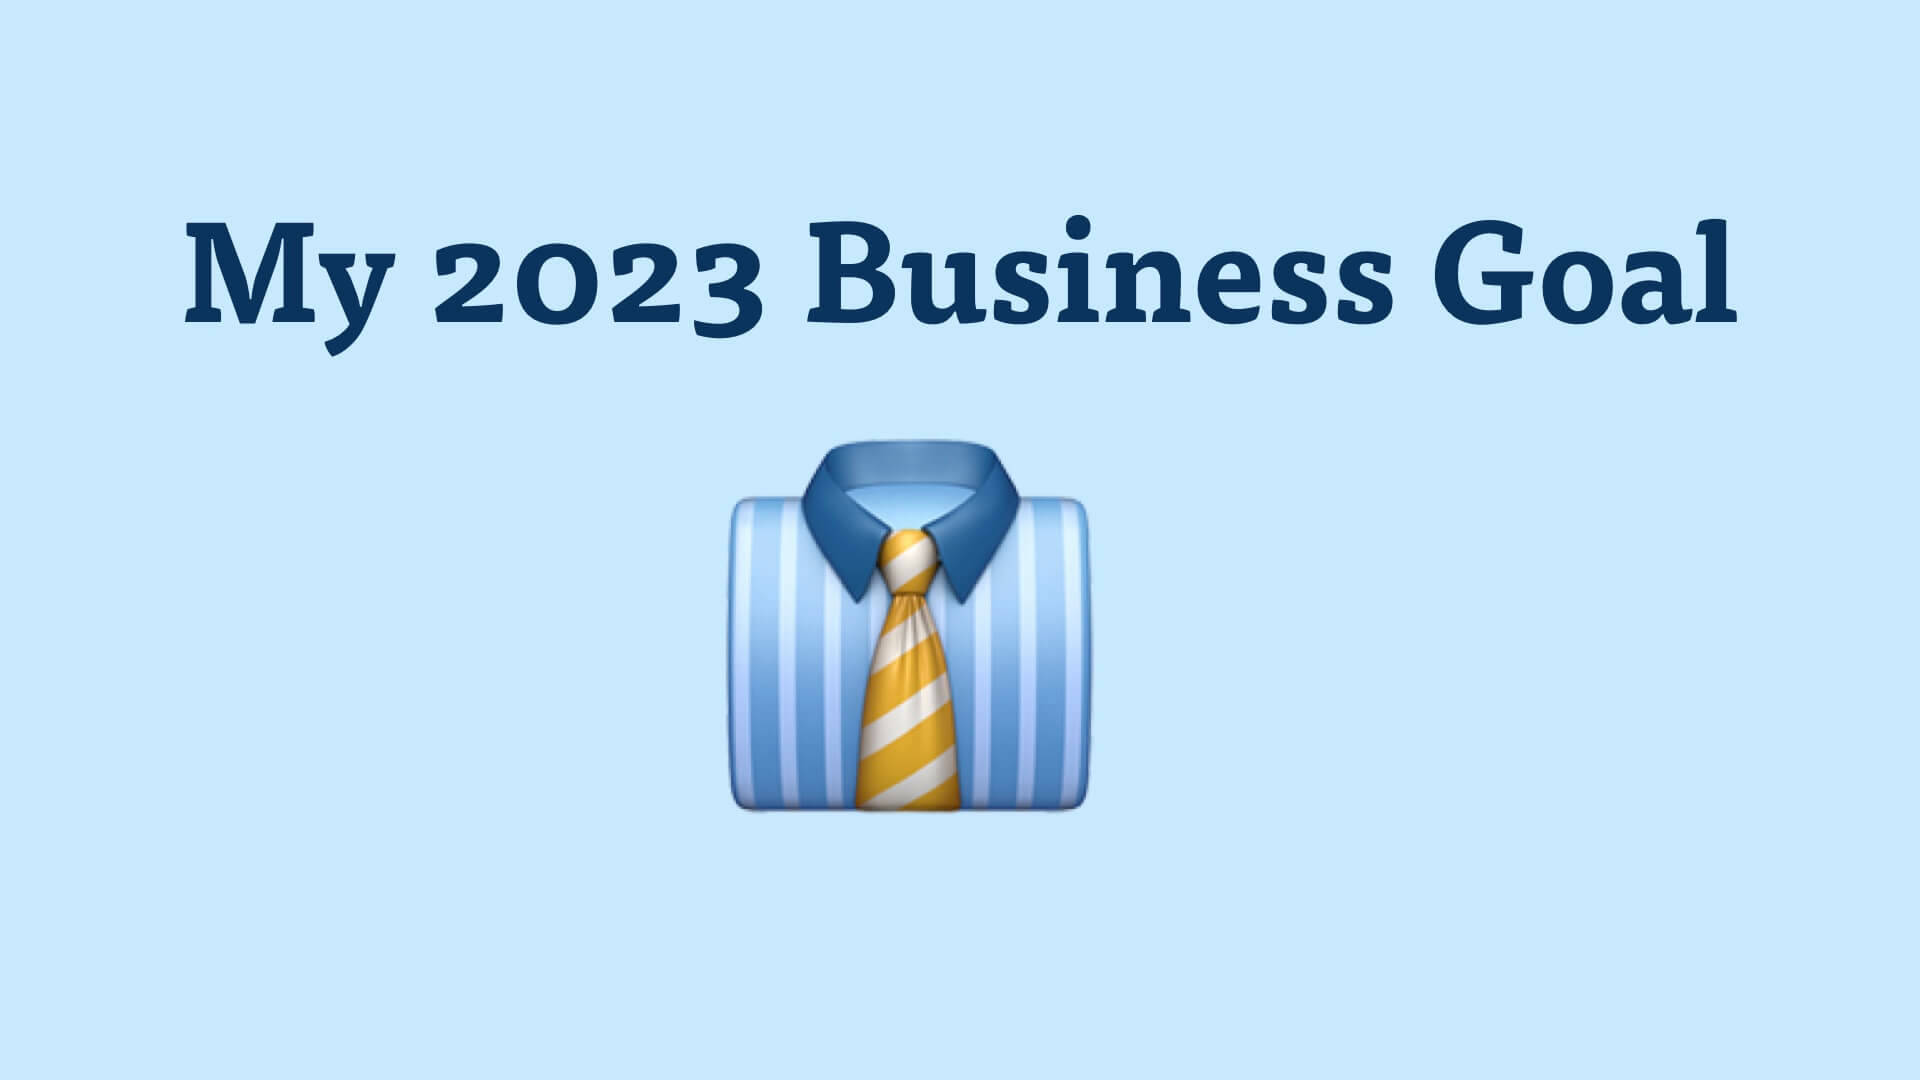 2023-01-07-open-graph-image-2023-business-goal.jpg